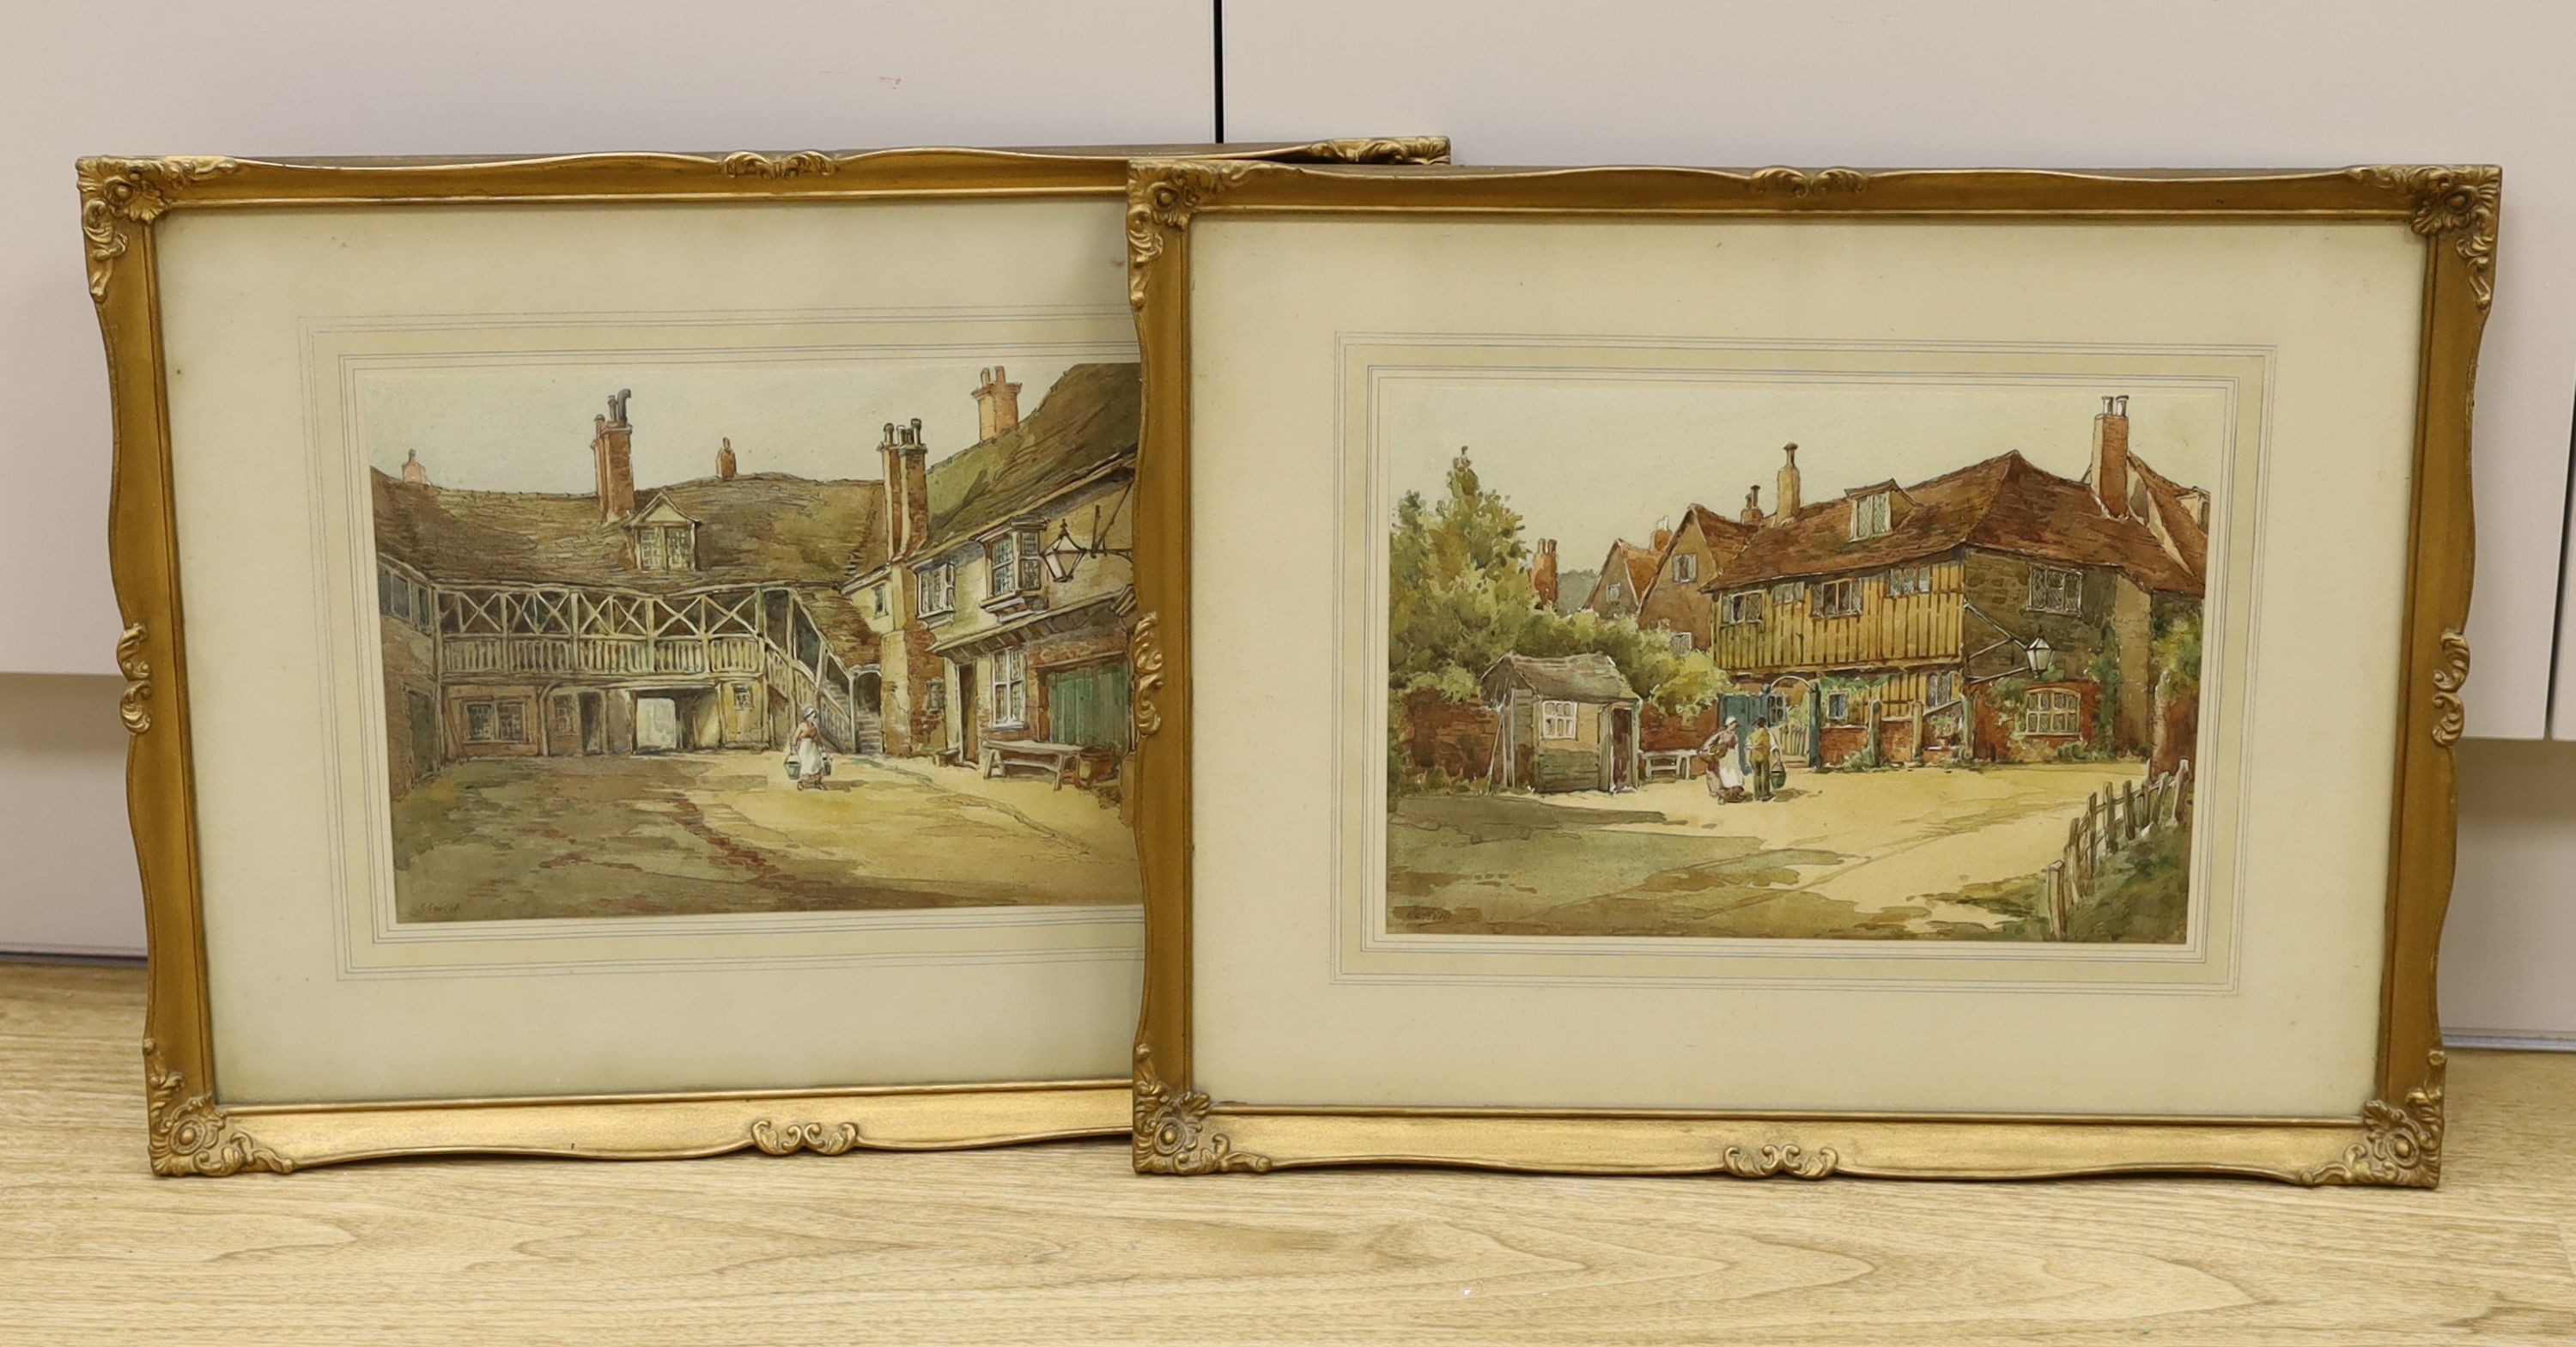 George Goodall - two watercolours, The George Inn, Huntingdon and The Mermaid Inn, Rye, signed, 21 x 30cm